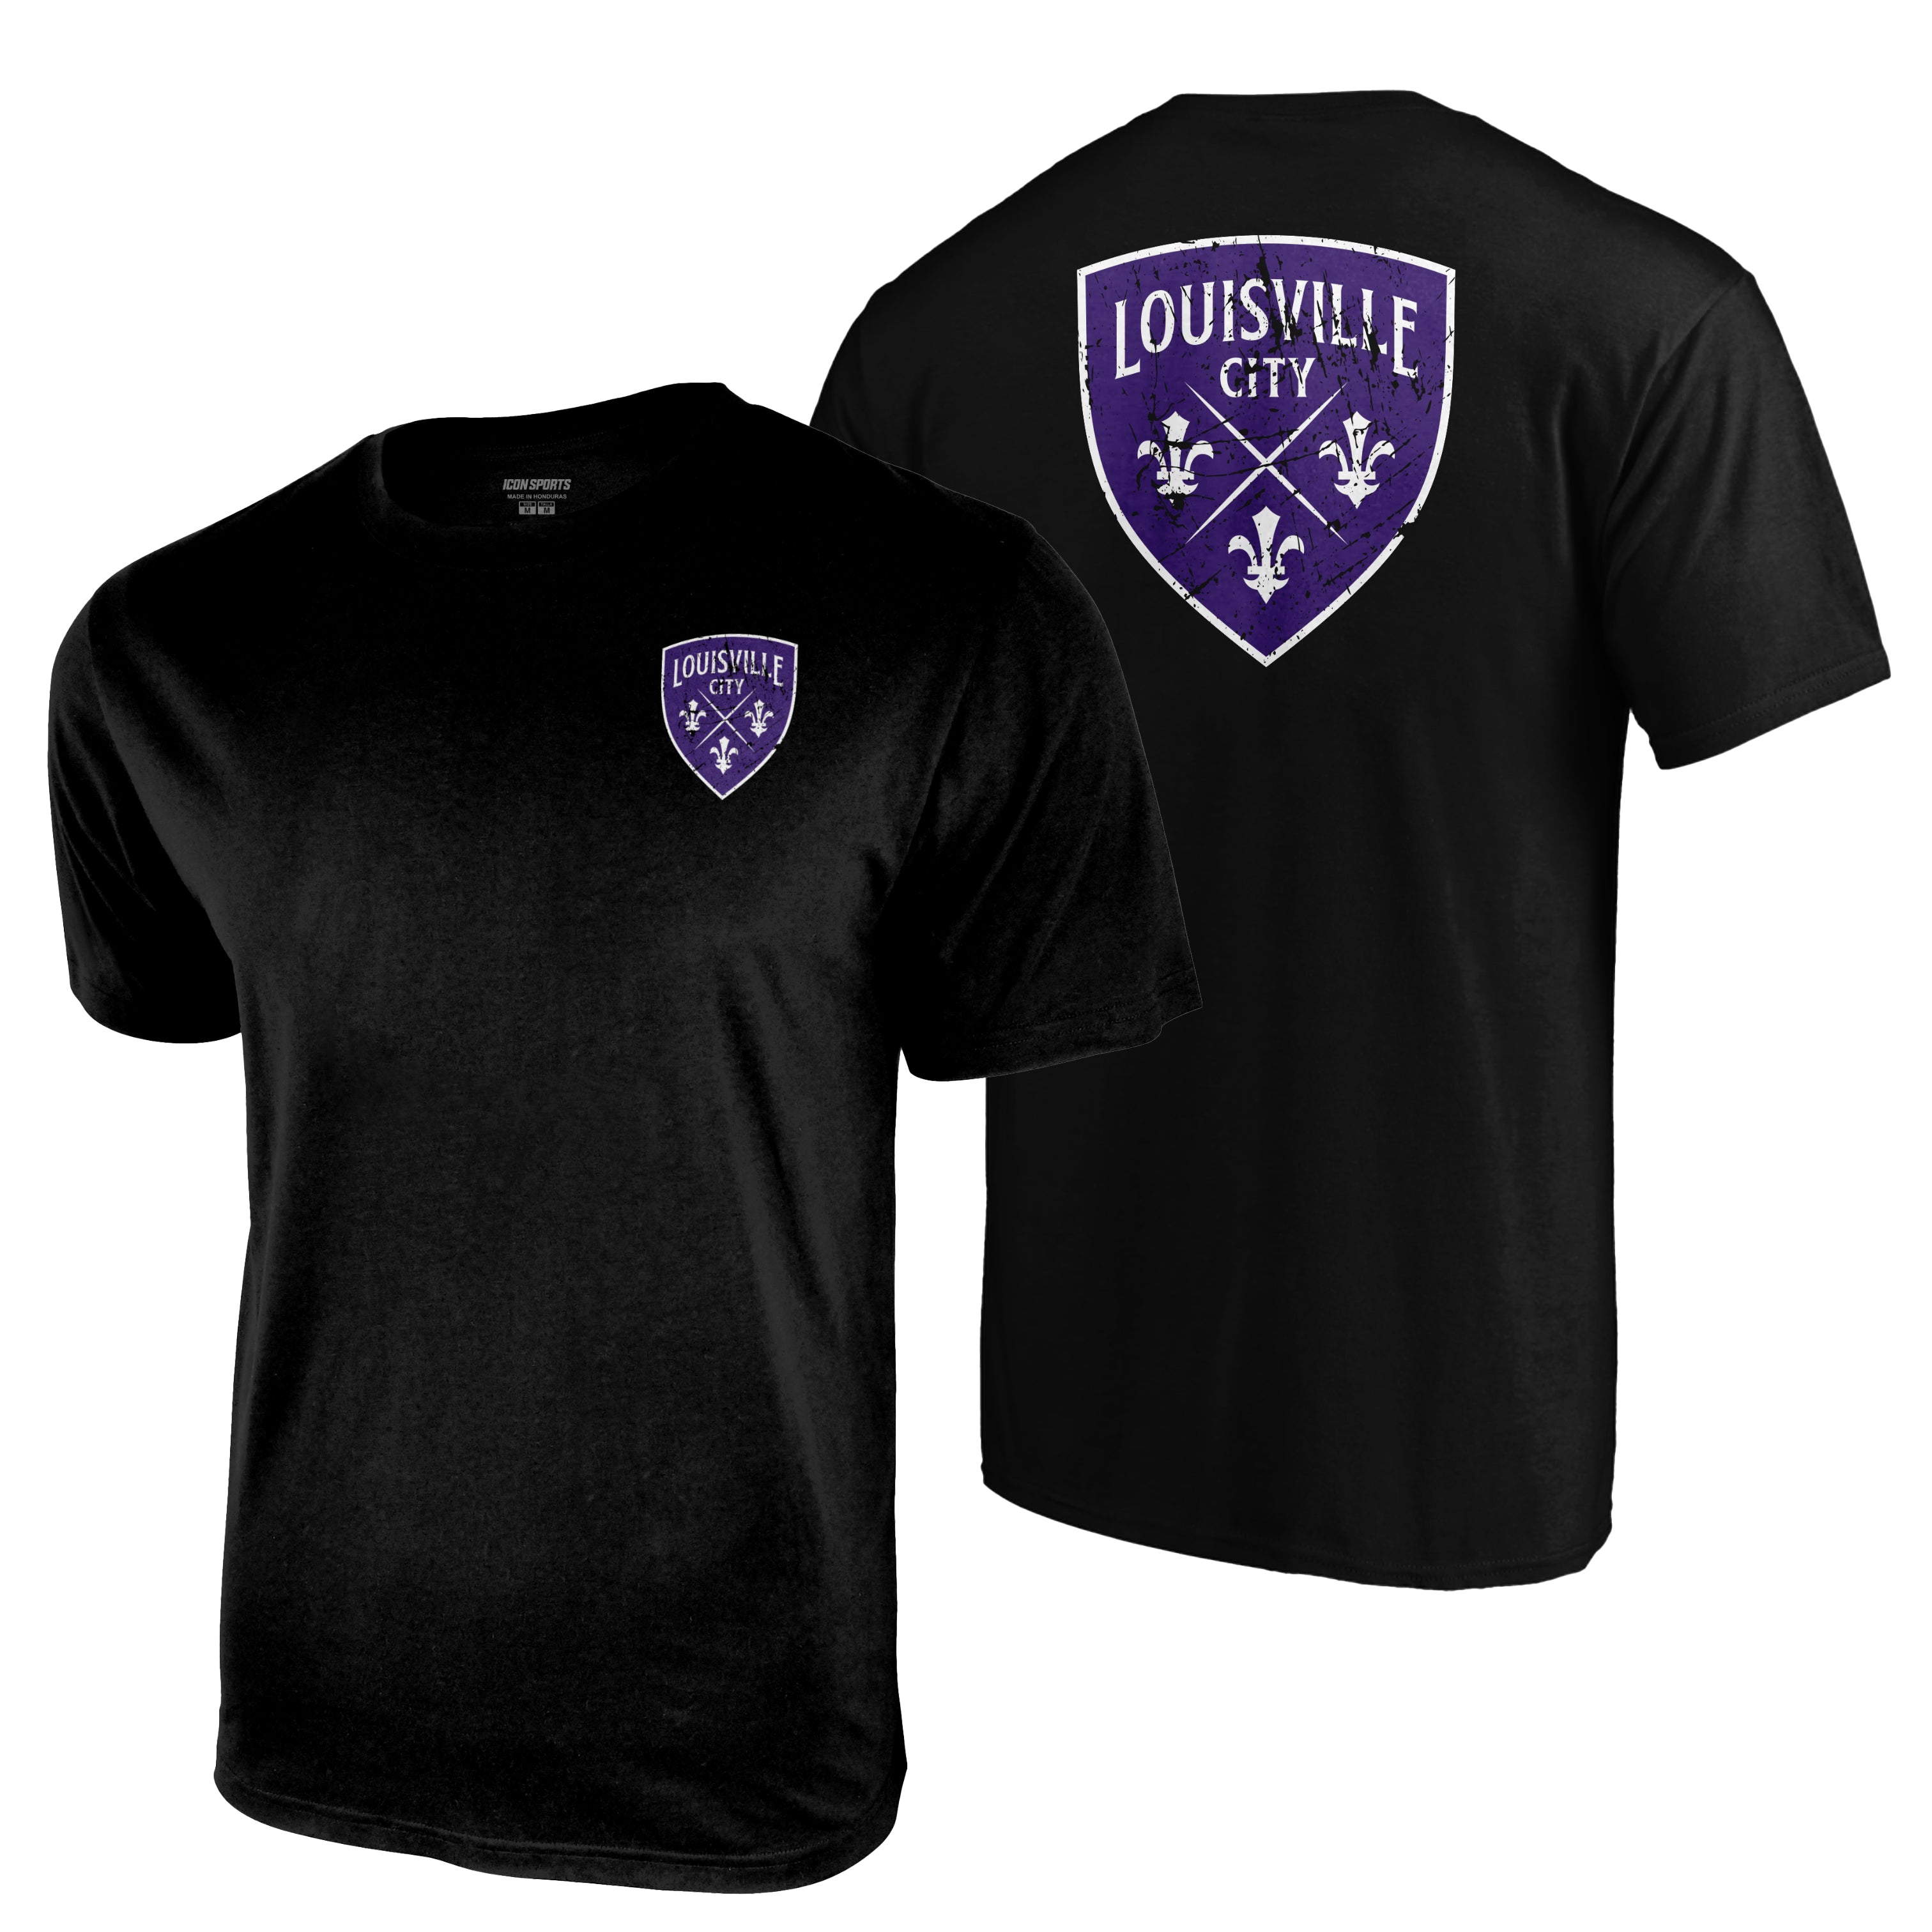 Louisville City USL Adult Women's Graphic T-Shirt in Purple - Shop